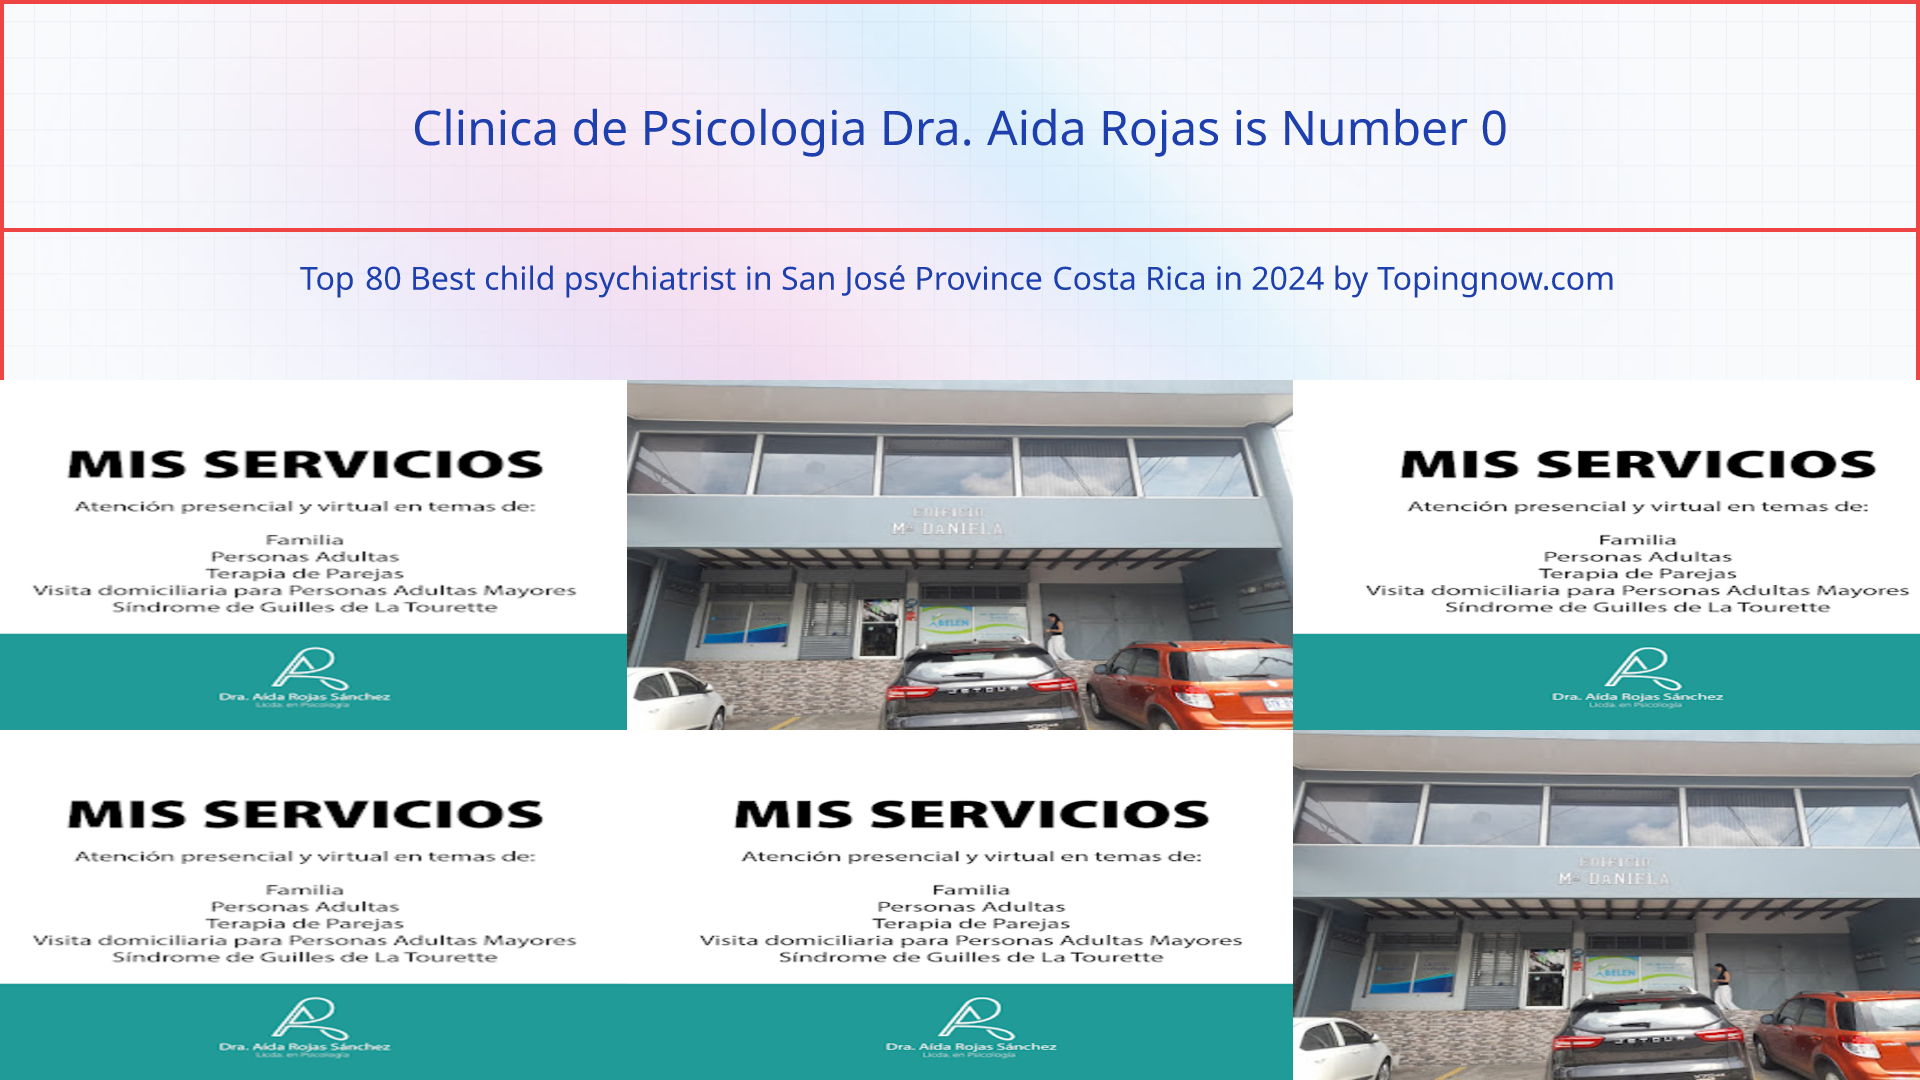 Clinica de Psicologia Dra. Aida Rojas: Top 80 Best child psychiatrist in San José Province Costa Rica in 2024